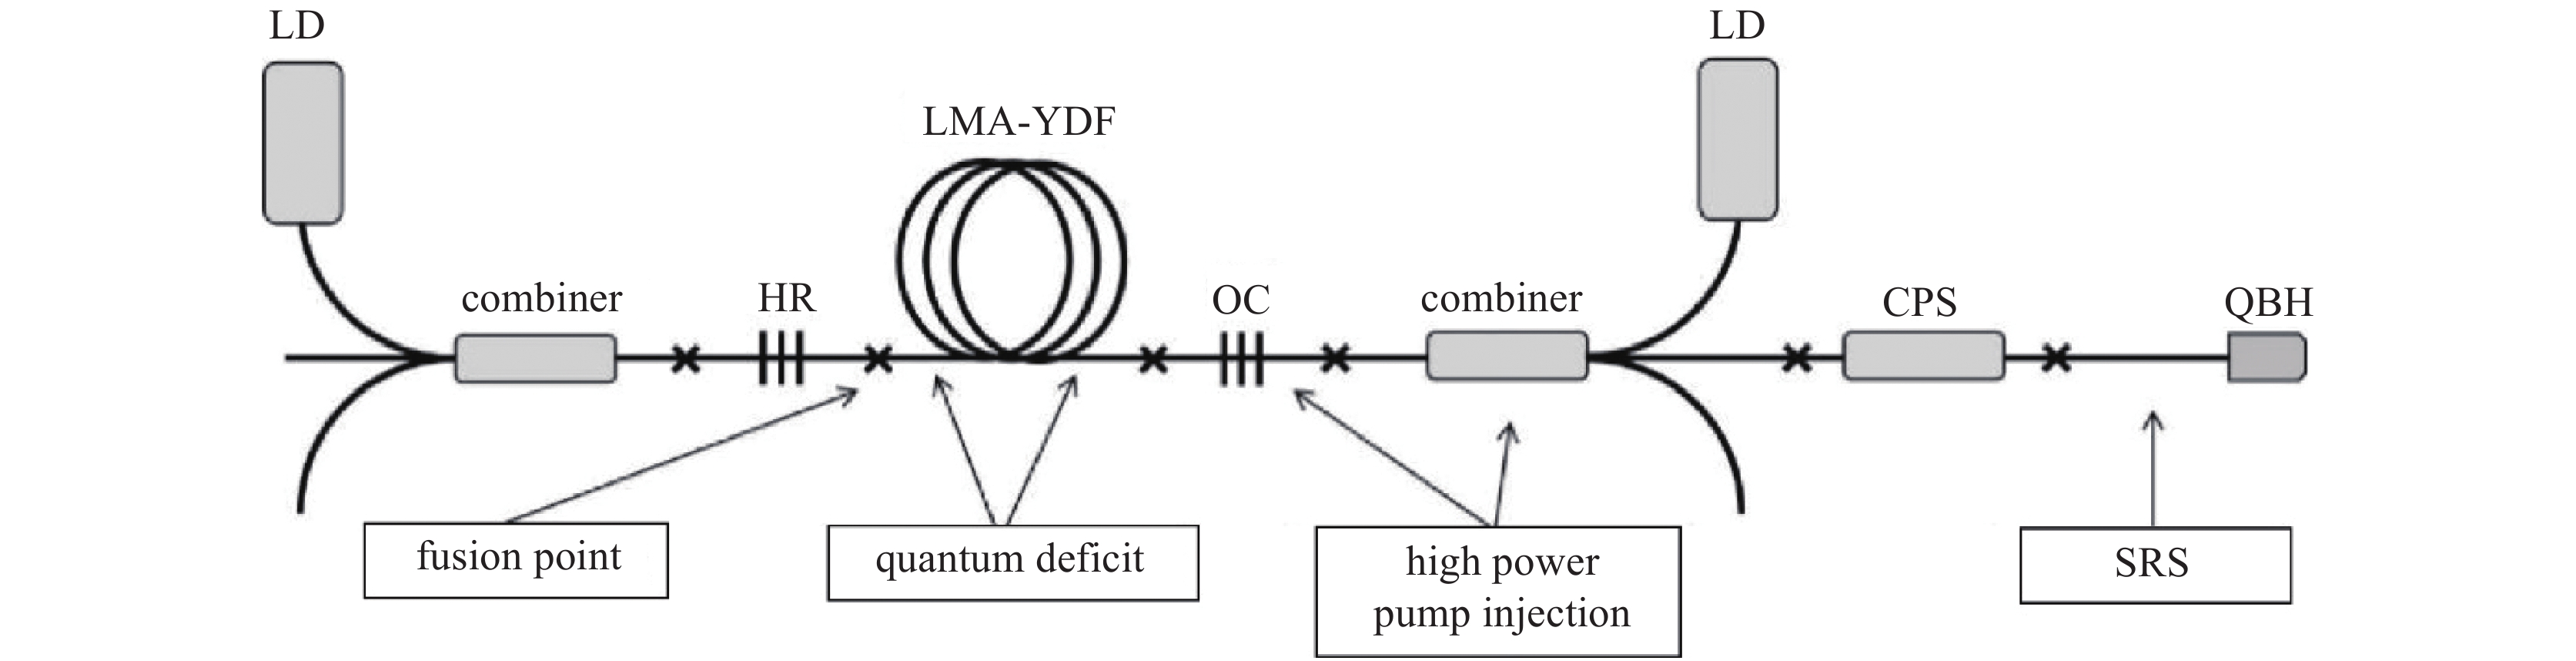 Thermal effects in fiber laser oscillator